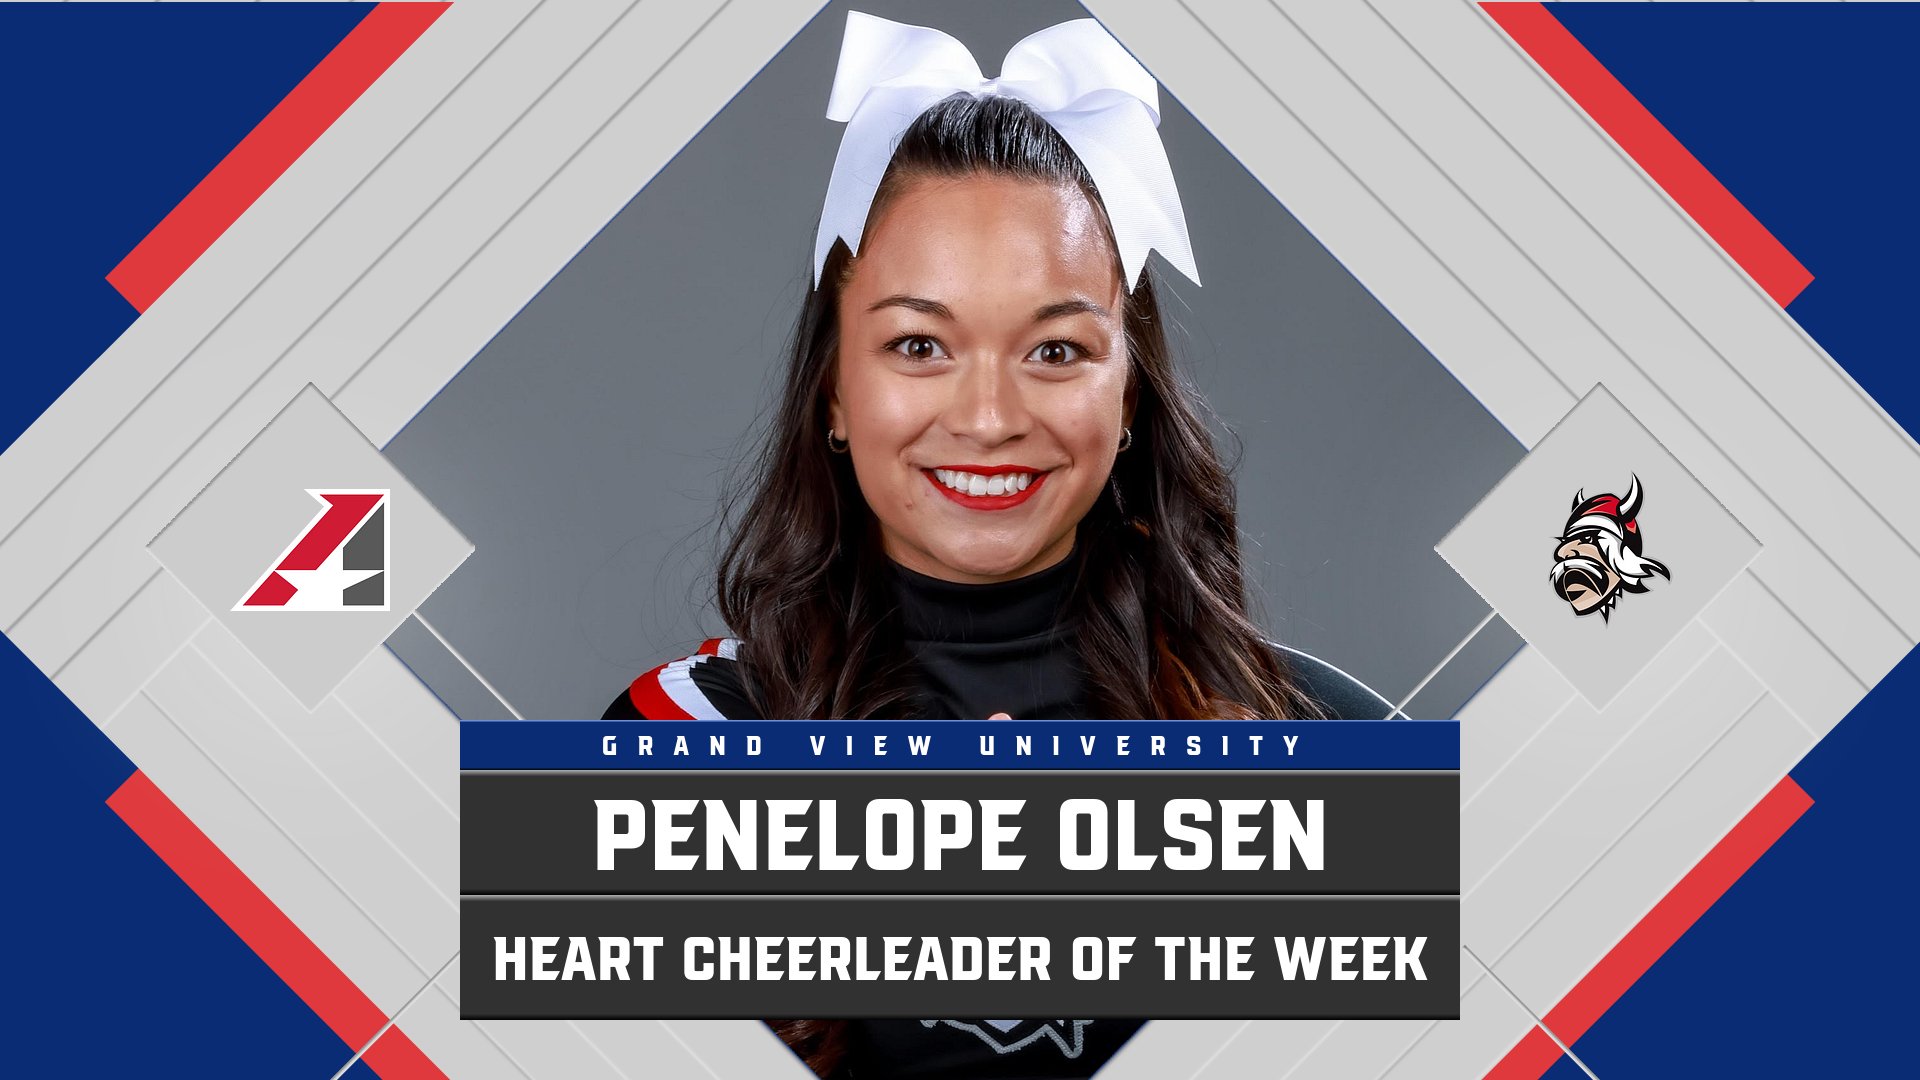 Grand View’s Penelope Olsen Earns First-Ever Heart Cheerleader of the Week Award